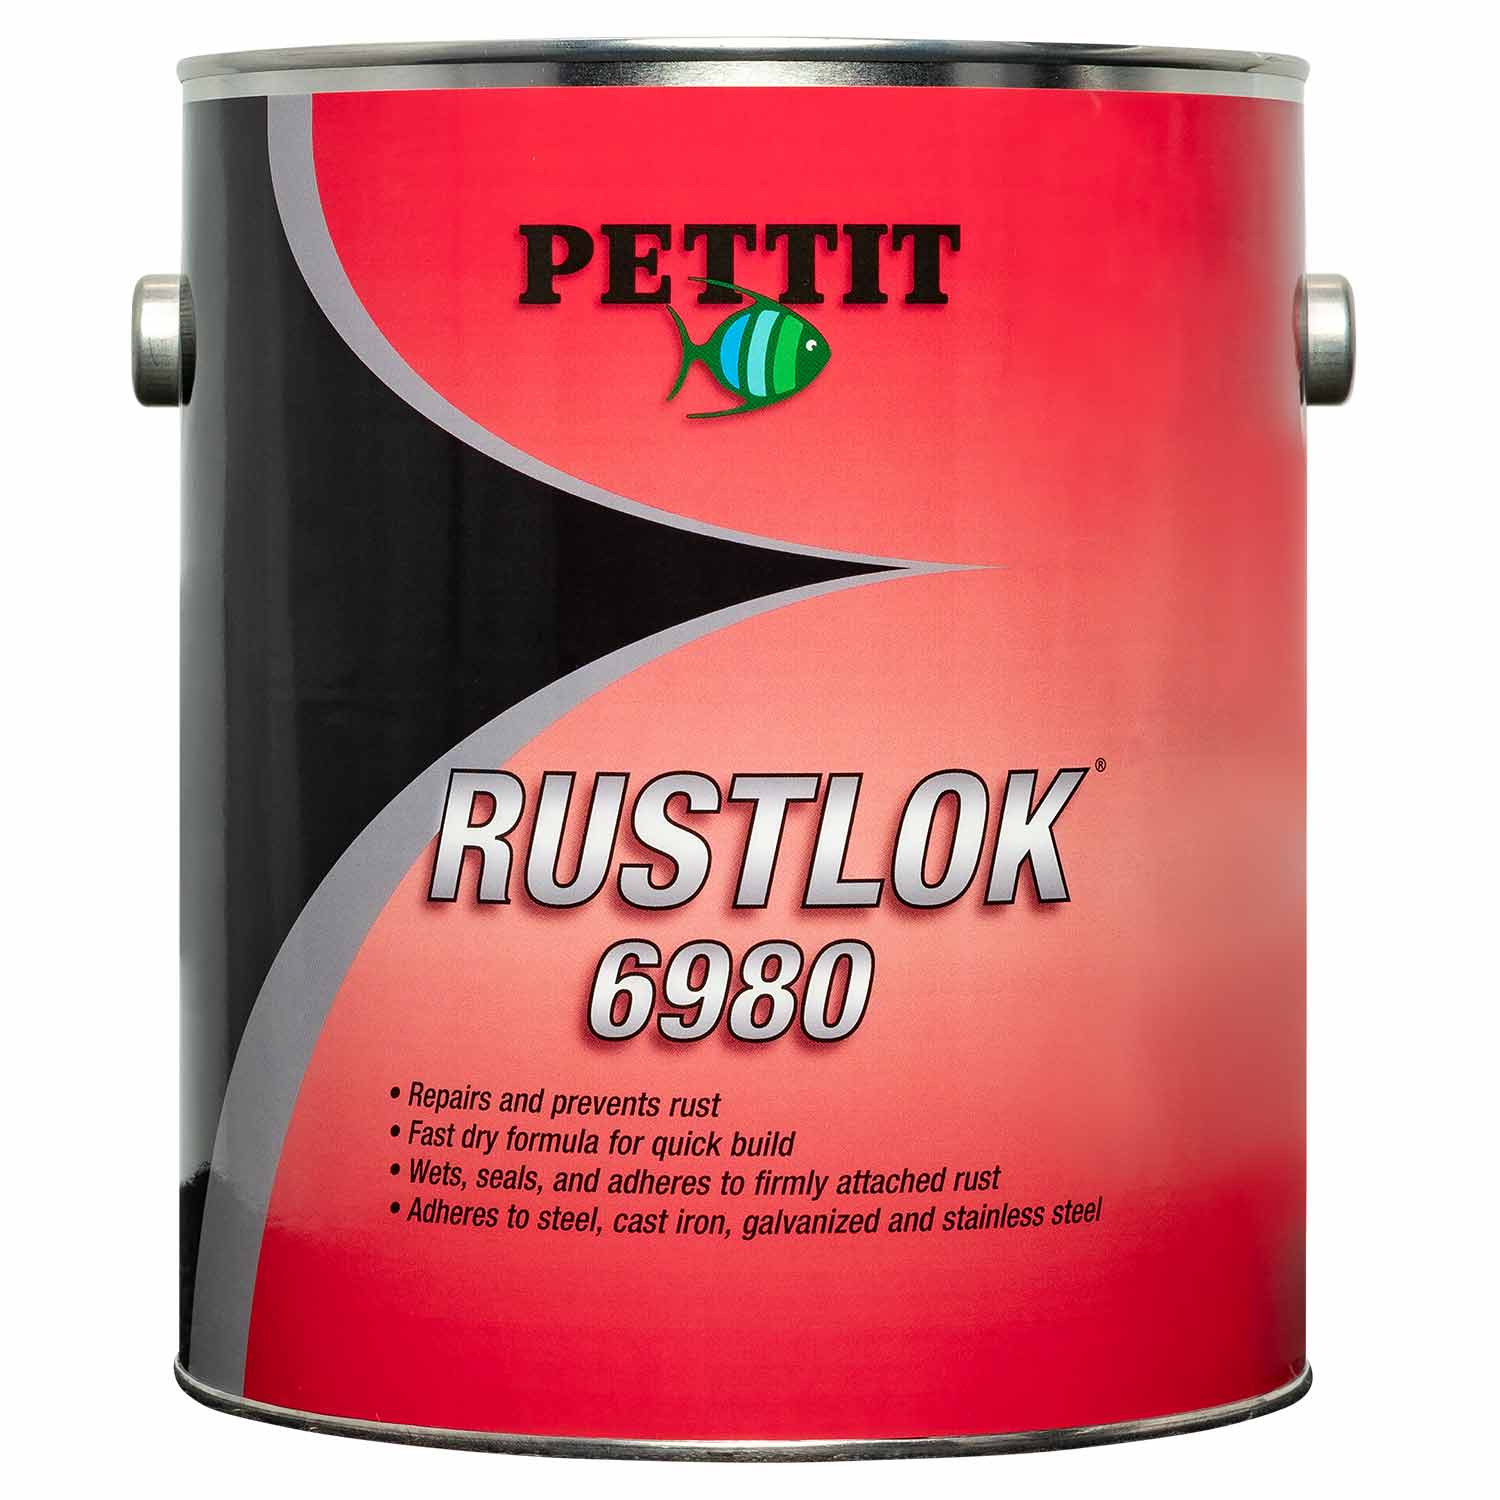 PETTIT PAINT 6980 Rustlok Steel Primer